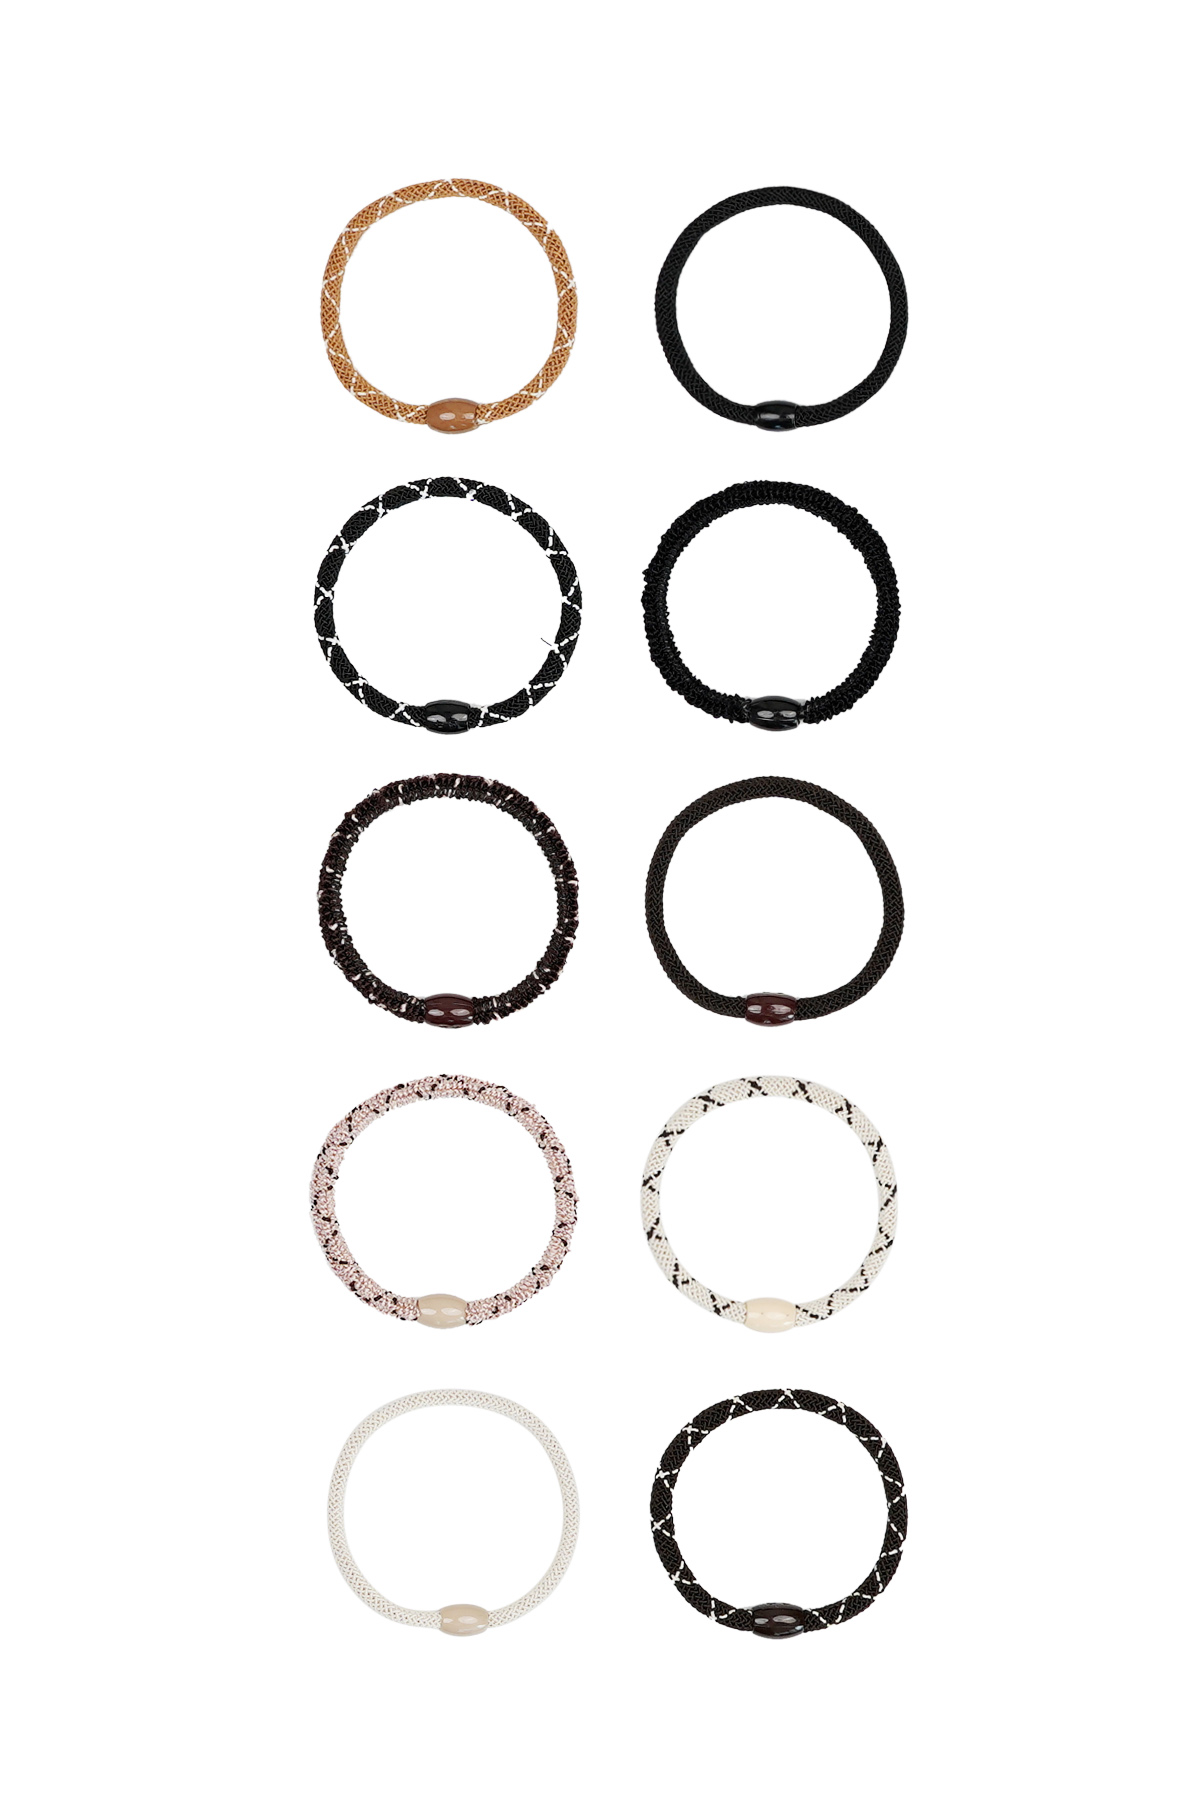 Hair elastic bracelets box basic colors - multi